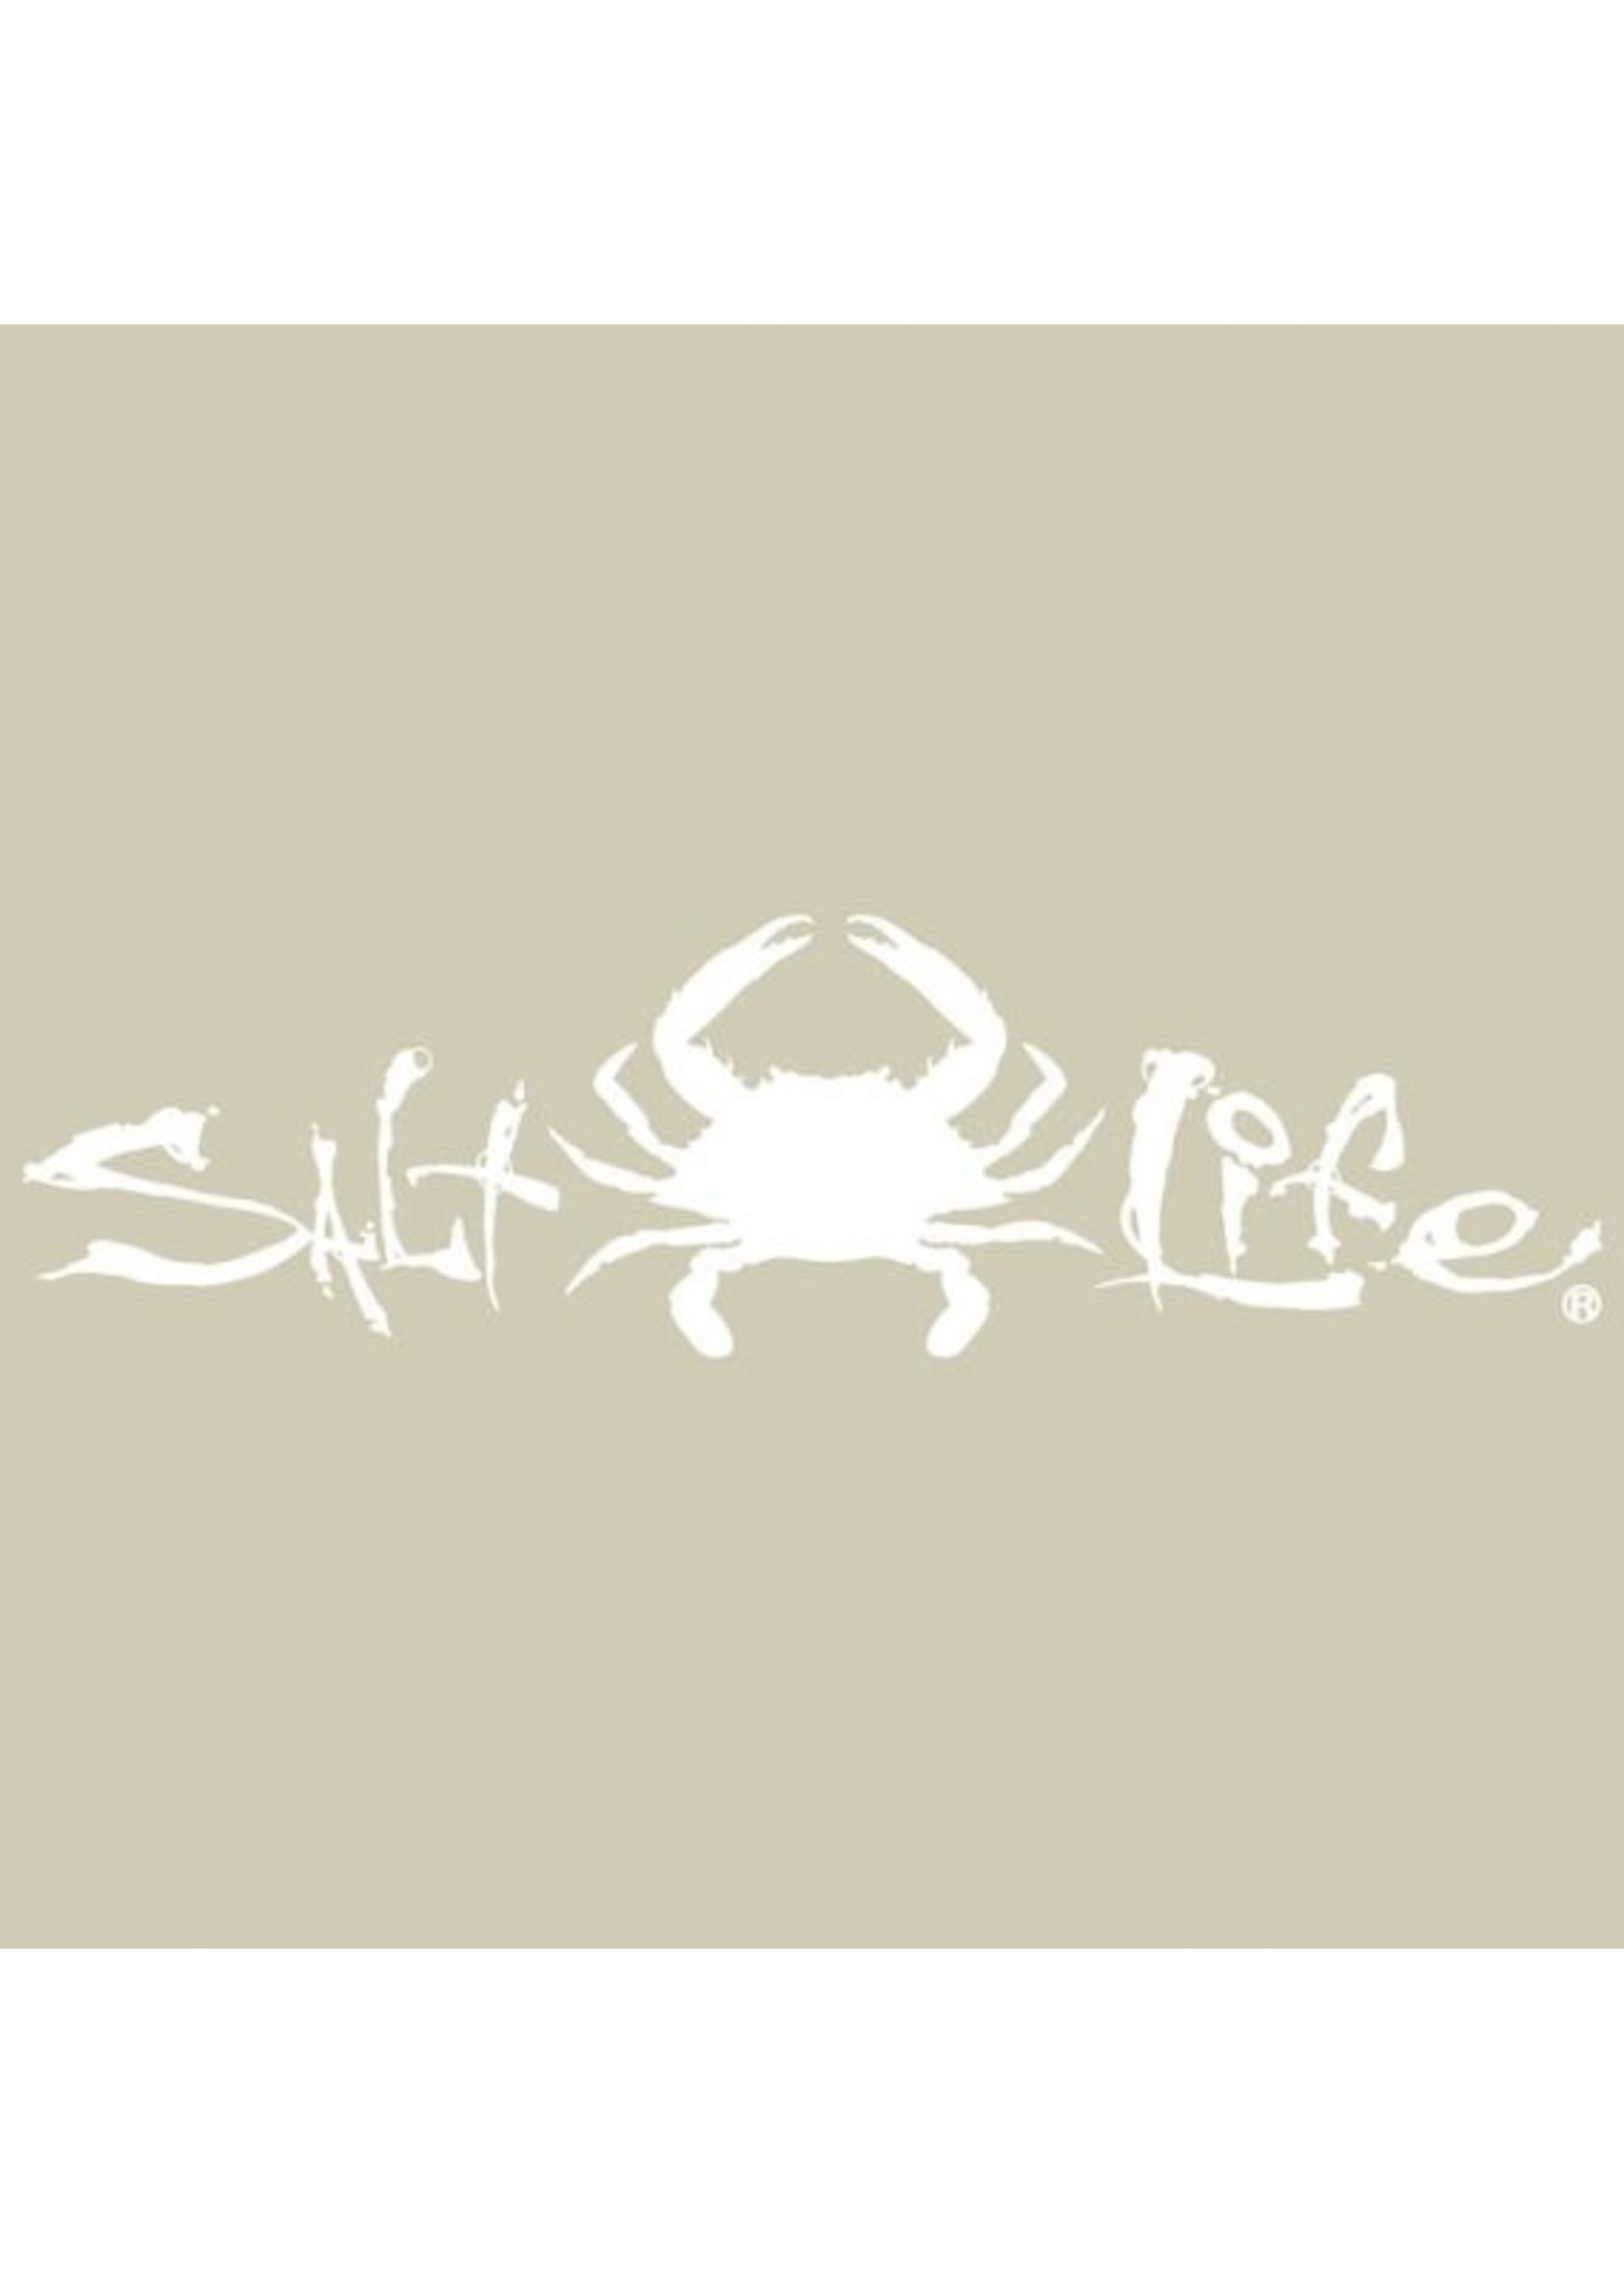 Salt Life Signature Crab Small Decal